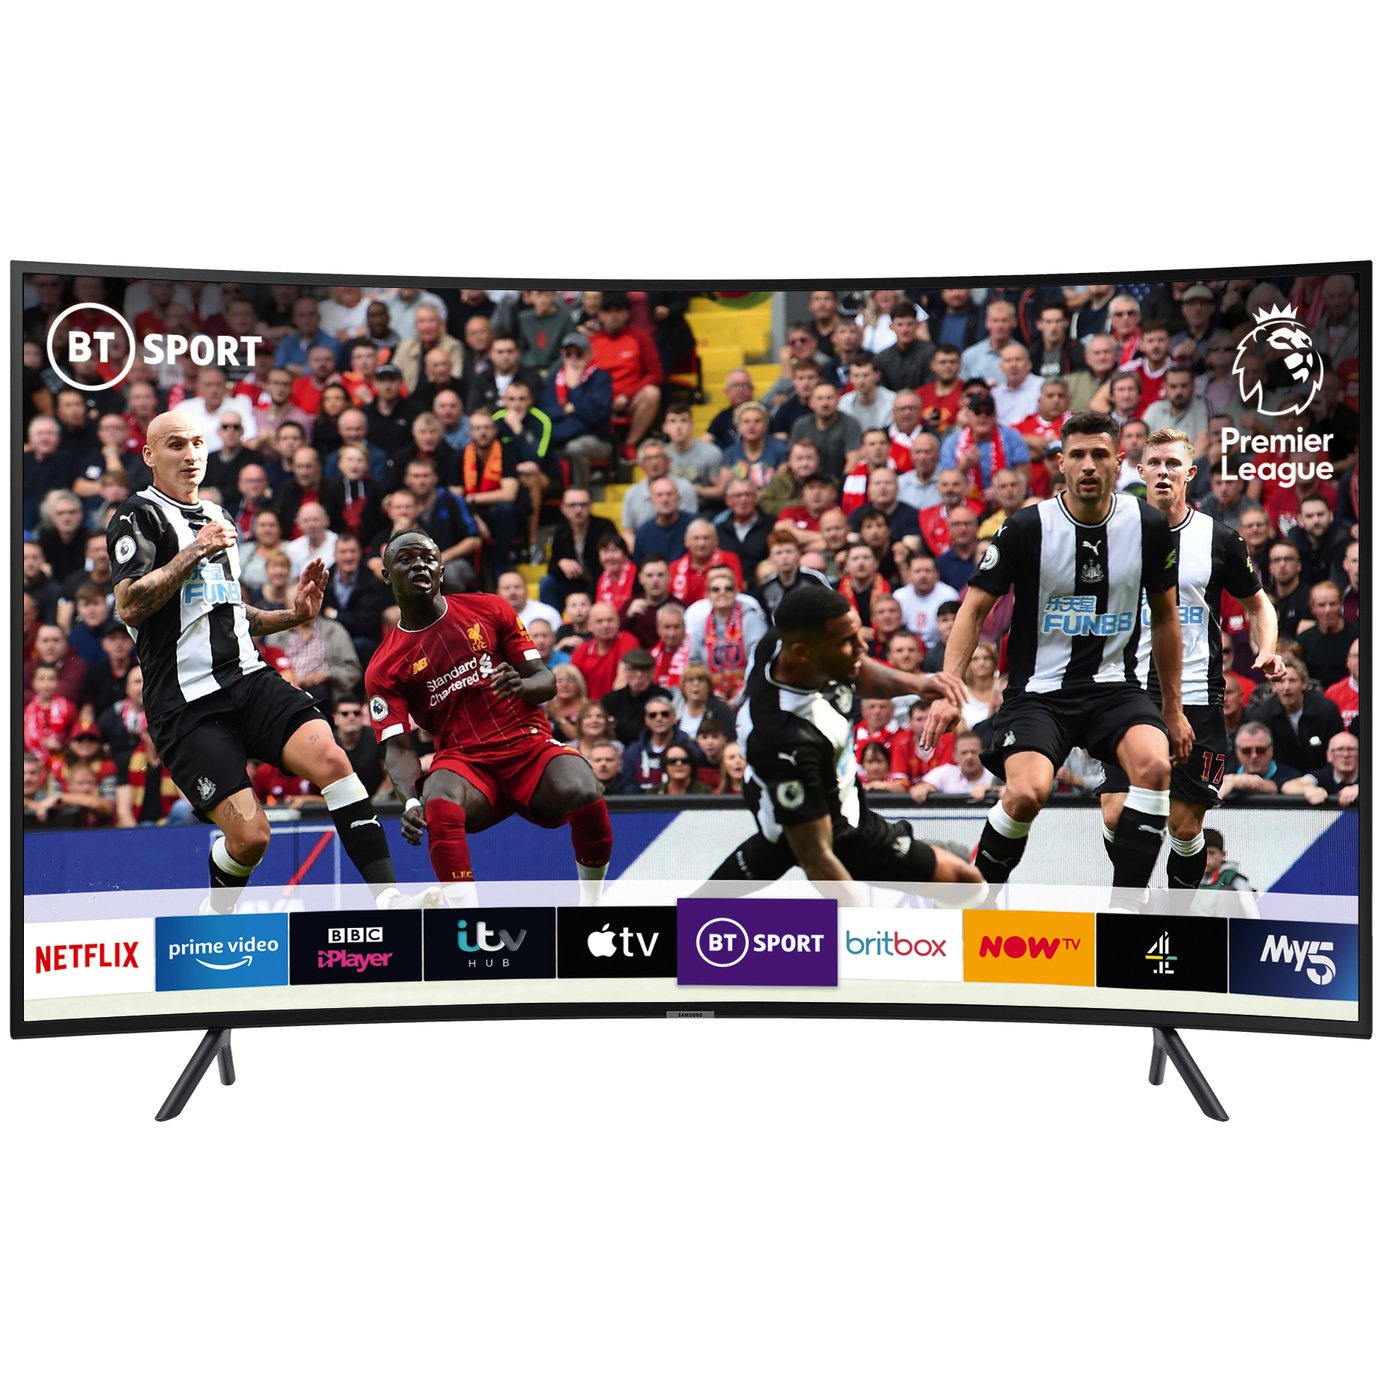 Samsung 55 Inch UE55RU7300KXXU Smart 4K HDR LED TV Review